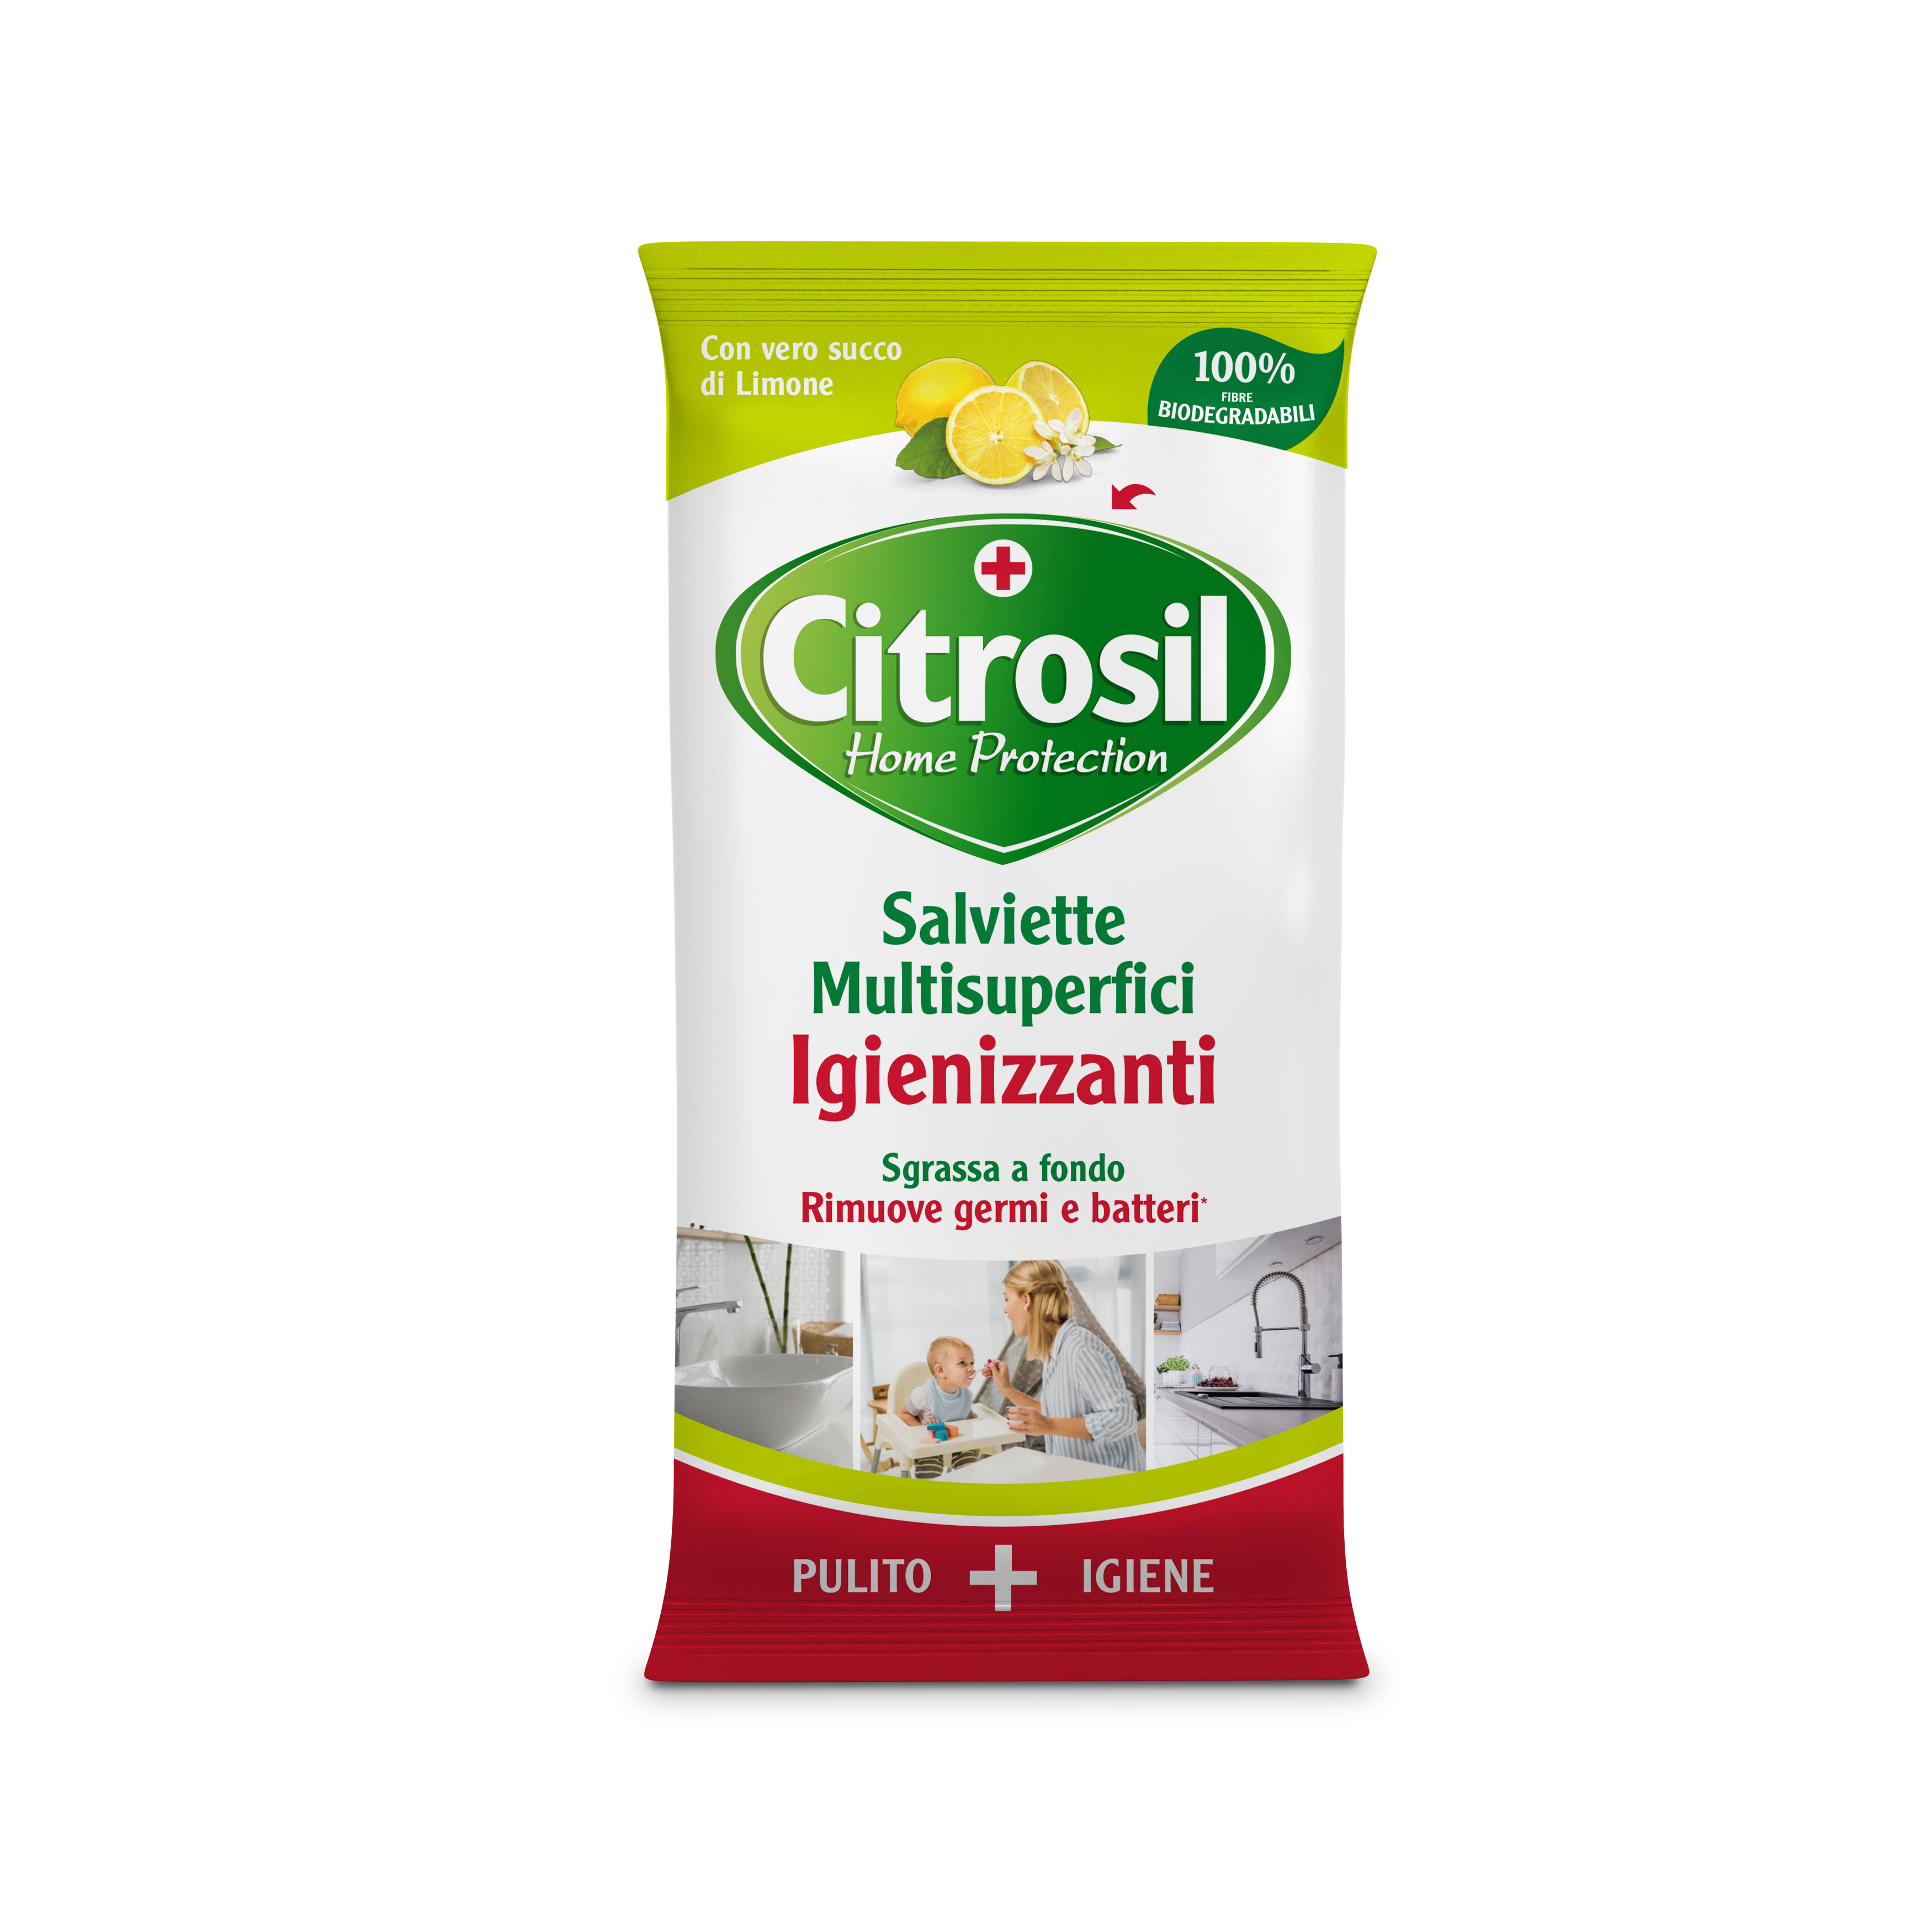 Image of Salviette Multisuperfici Igienizzanti Al Limone Citrosil Home Protection 40 Panni